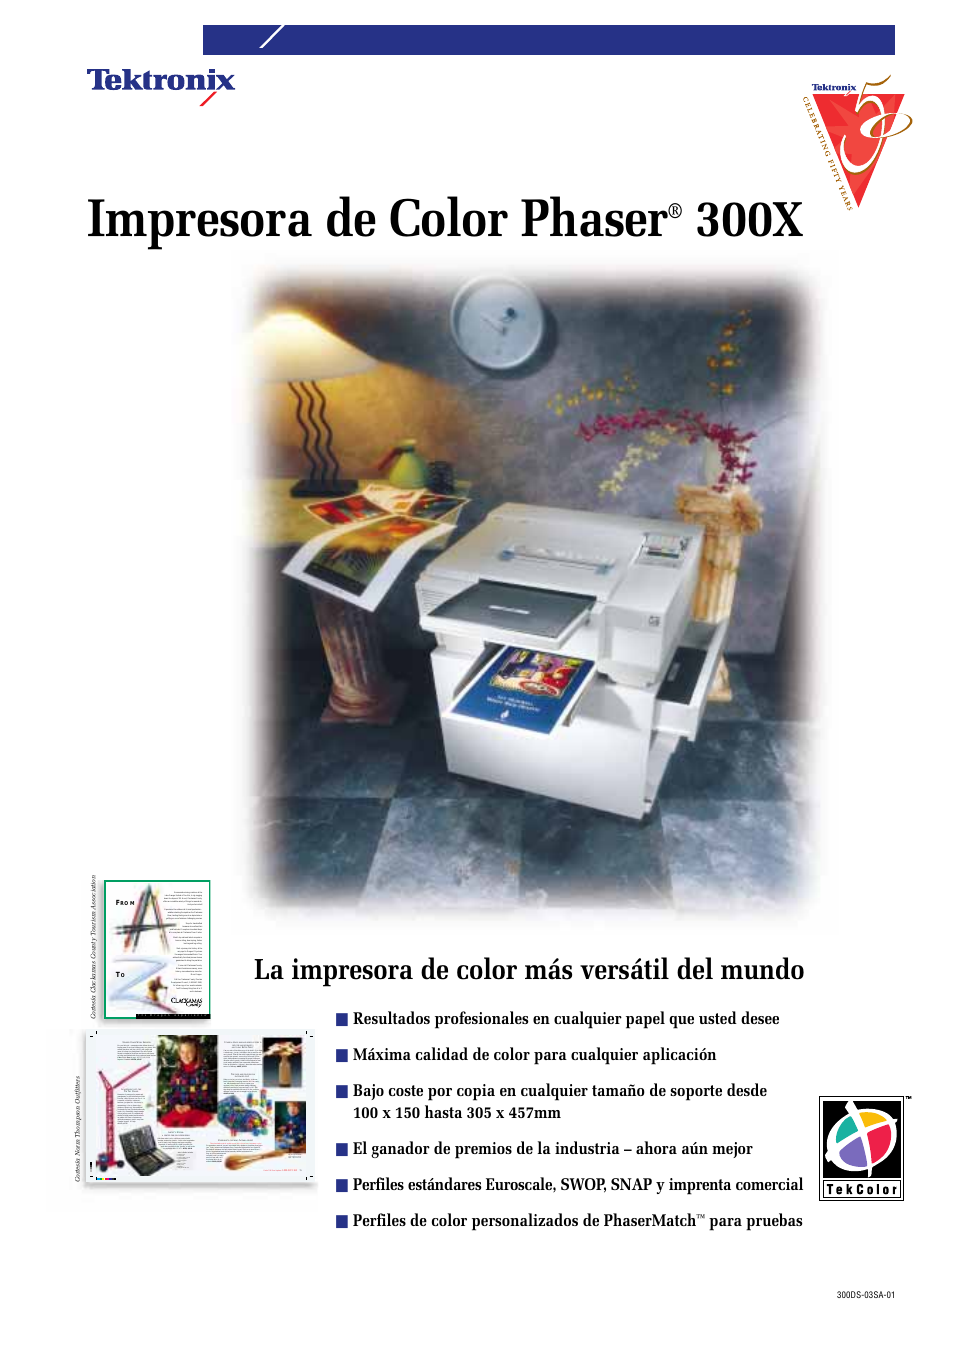 Phaser color printer 300X